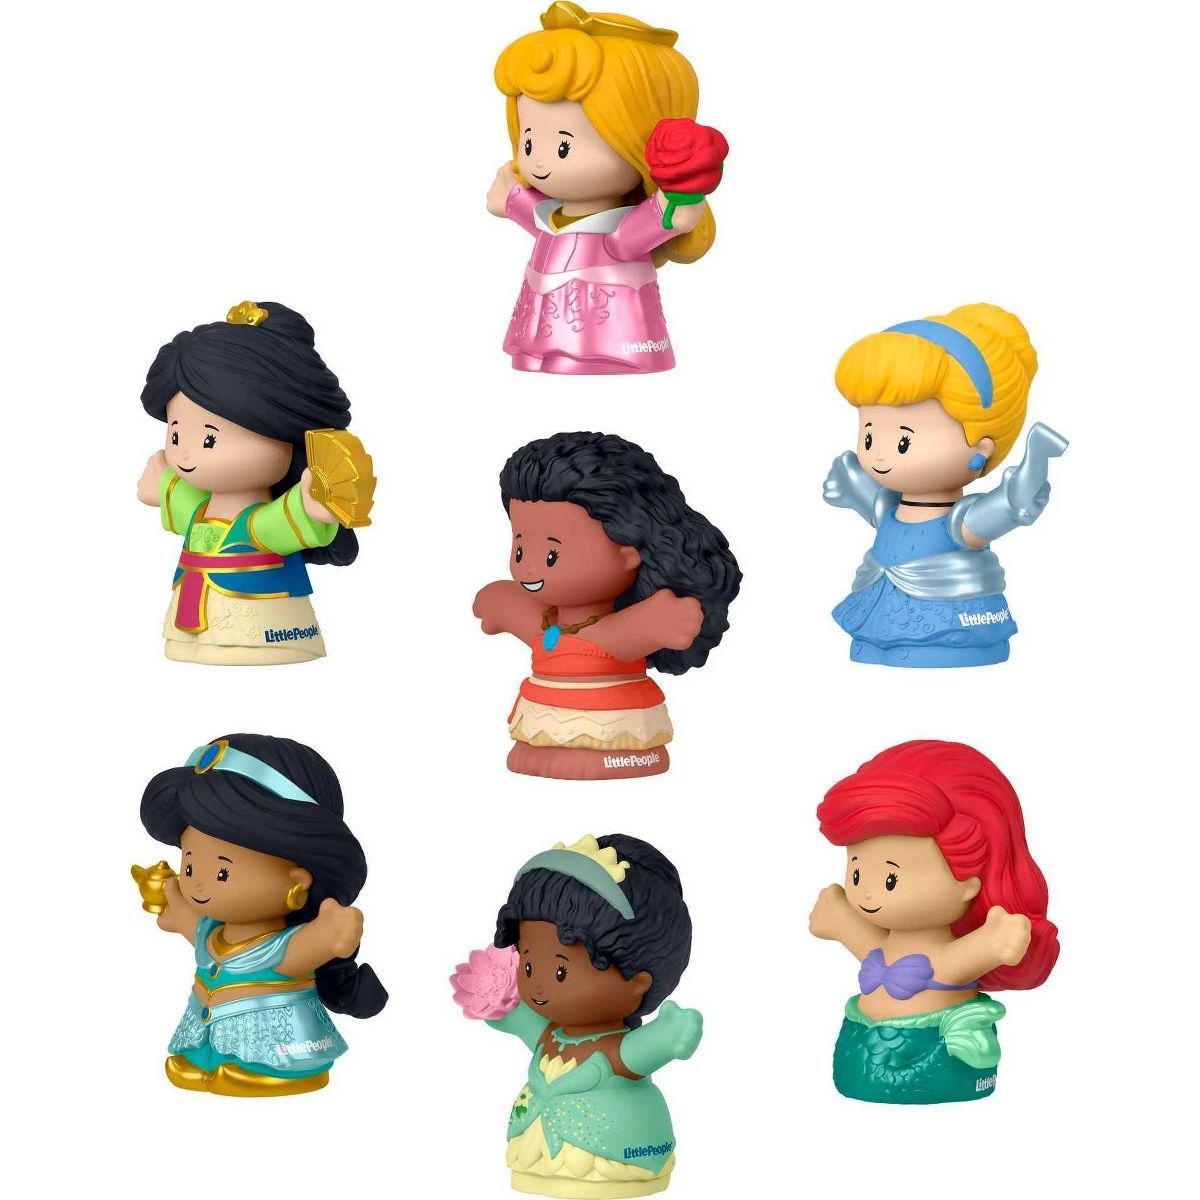 Little People Disney Princess Figures 7pk | Target